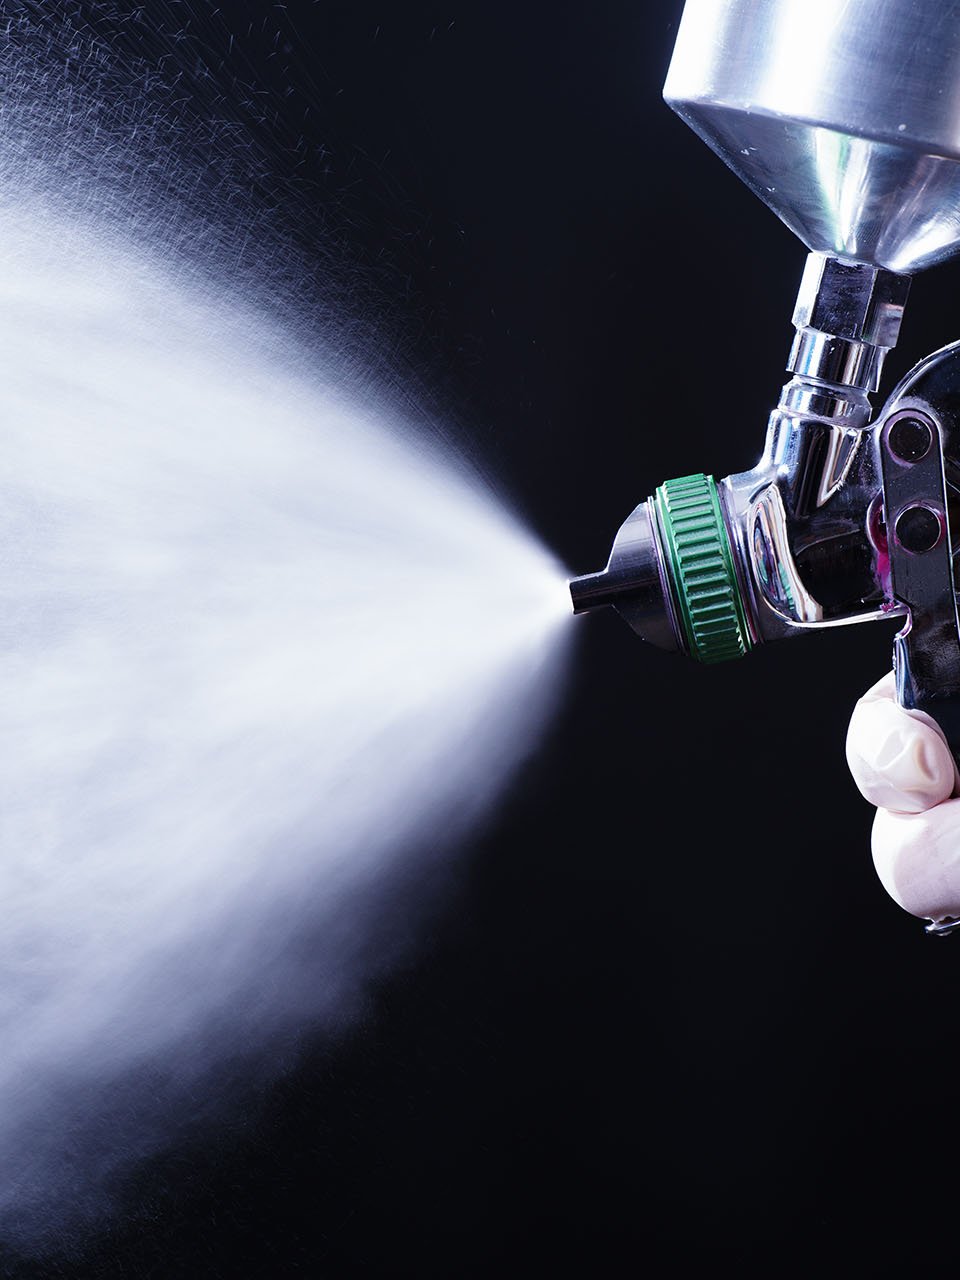 Spray gun sprays anti-friction coating